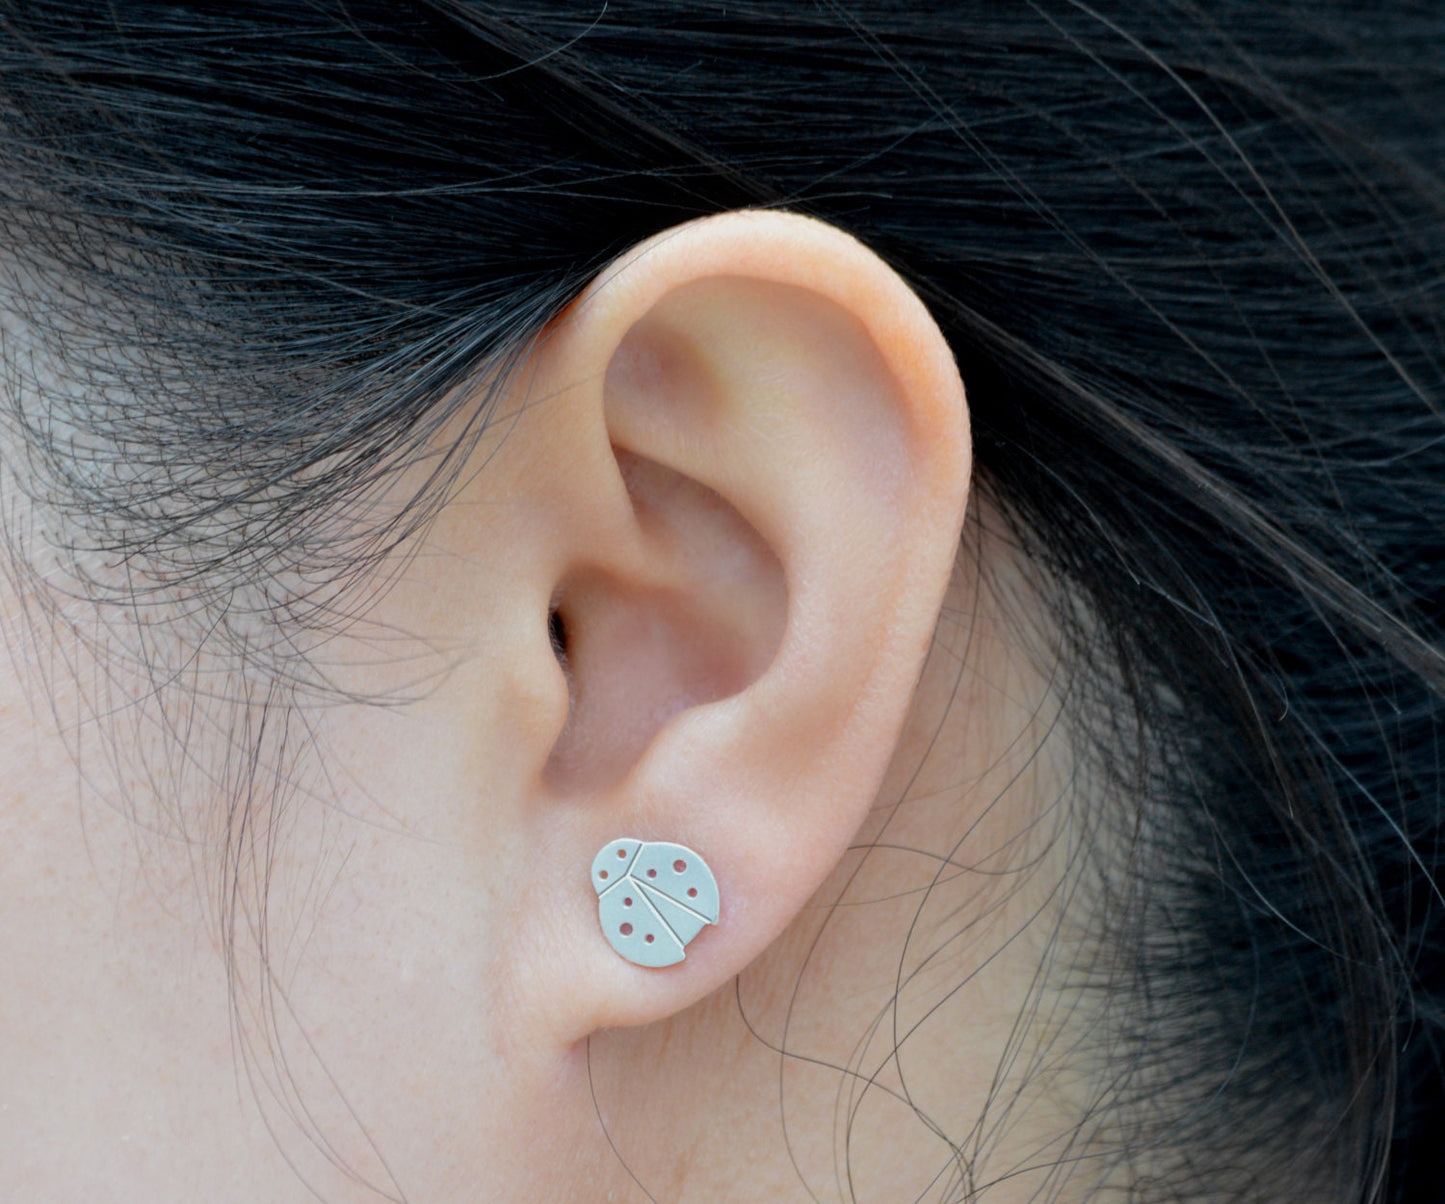 Ladybird Stud Earrings in Sterling Silver, Silver Ladybug Ear Posts